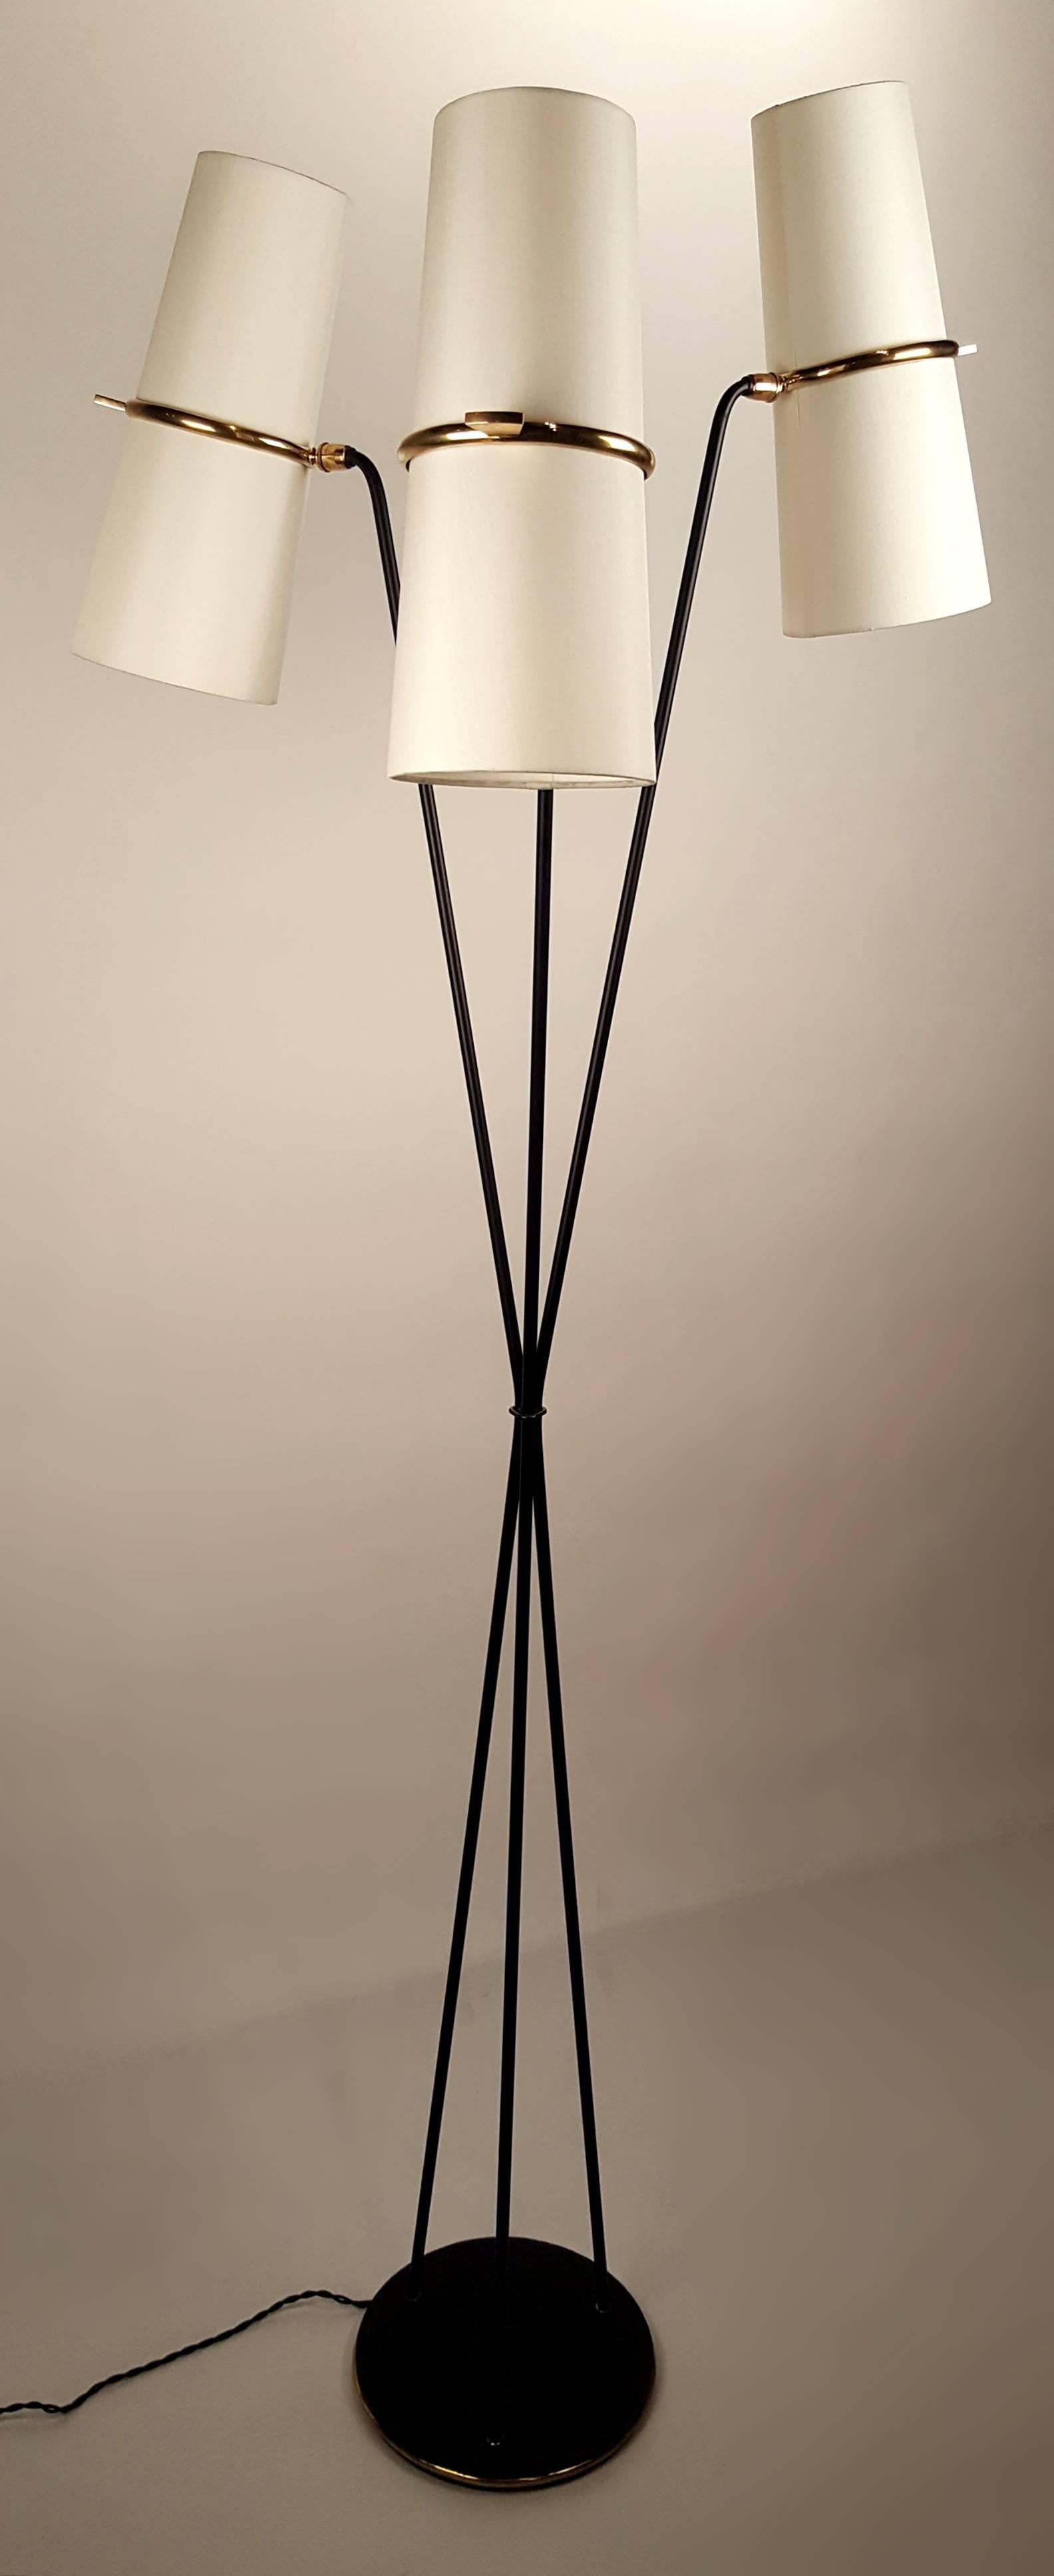 Mid-Century Modern Elegant French Modernist Three-Arm Floor Lamp By Maison Lunel